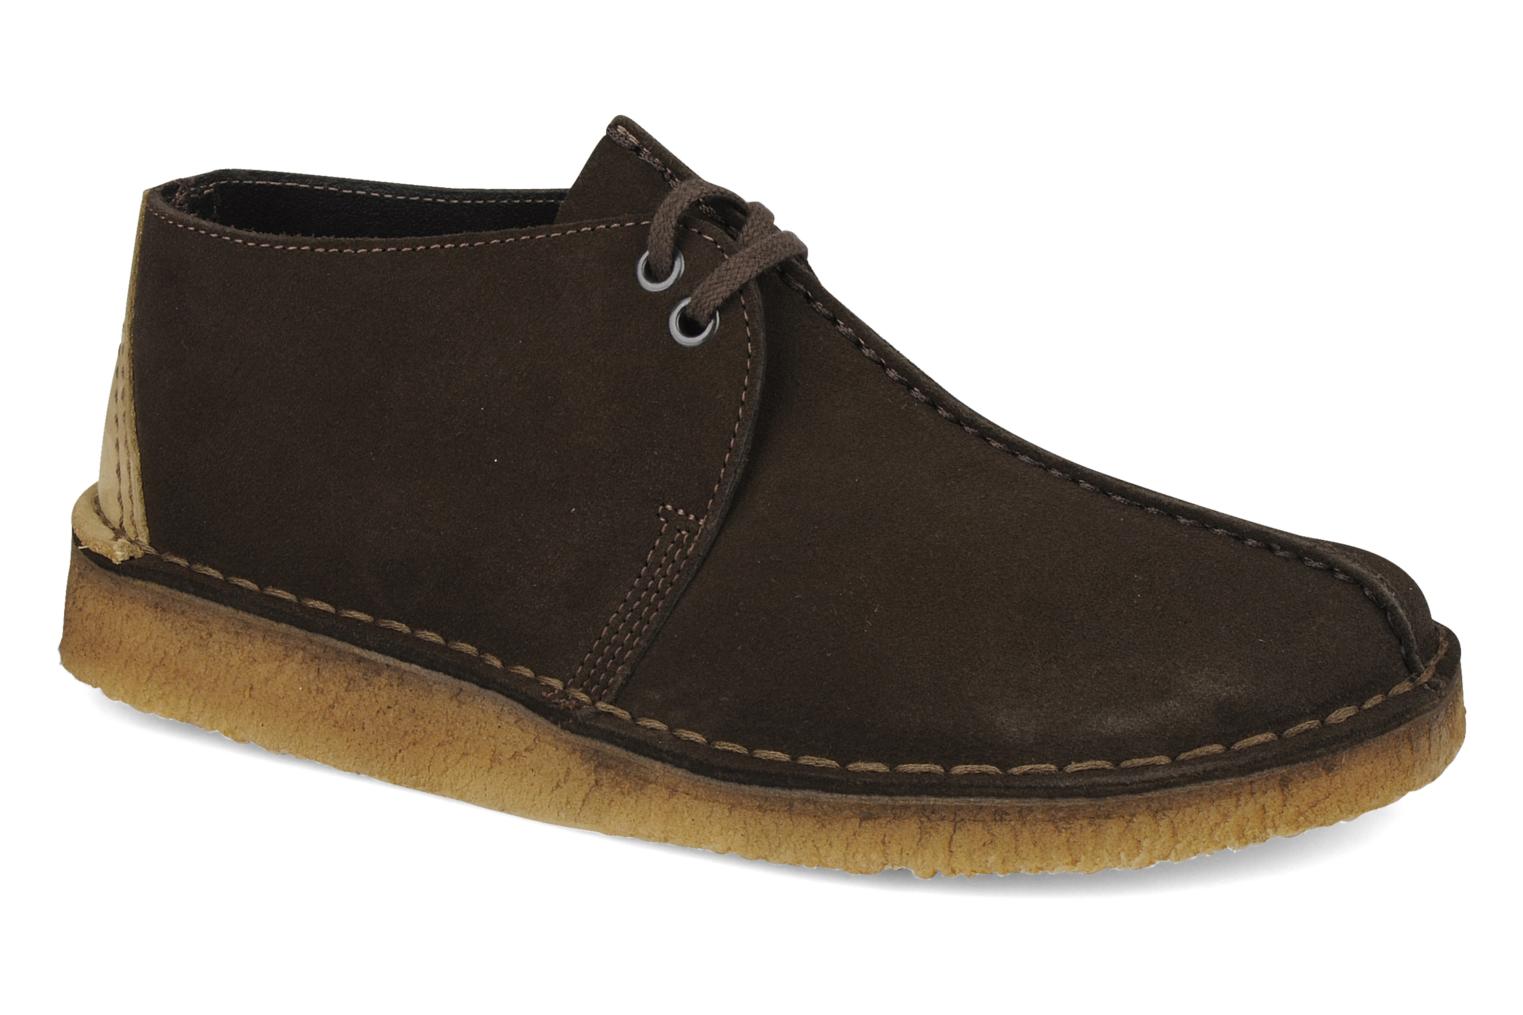 Clarks Originals Desert Trek Homme (Brown) - Lace-up shoes chez Sarenza ...